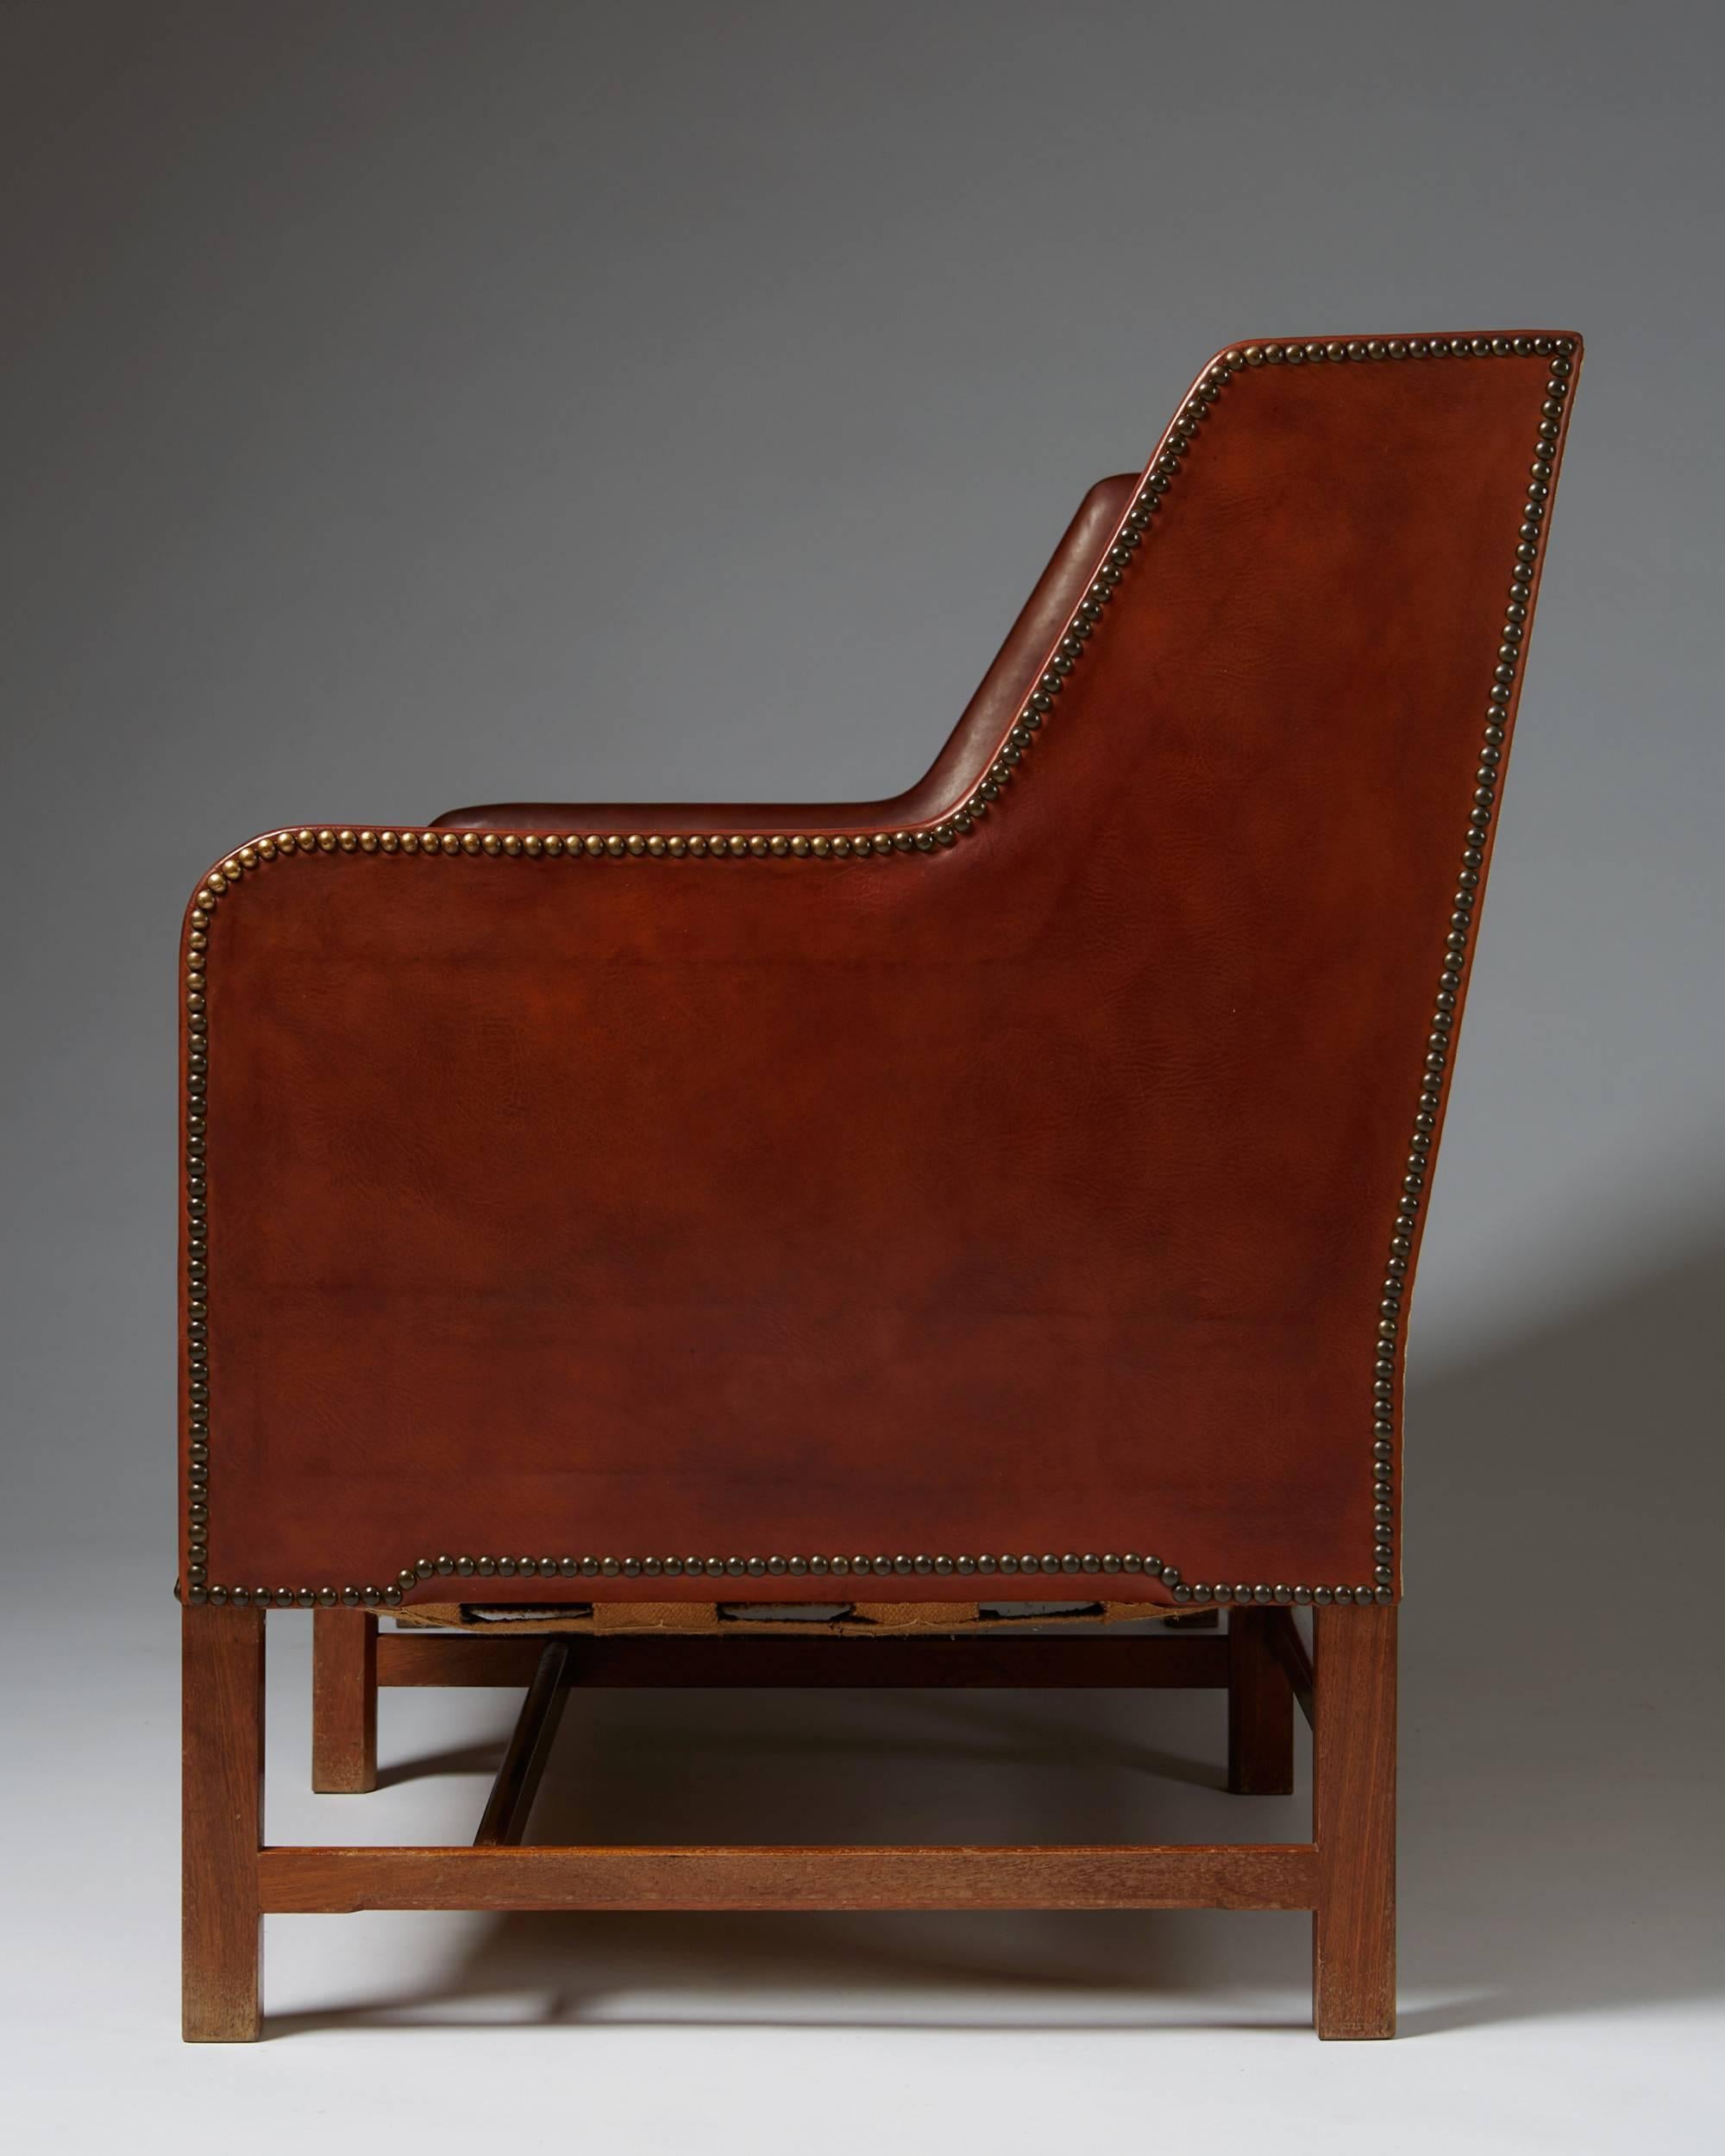 Leather Sofa Model 5011 Designed by Kaare Klint for Rud Rasmussen, Denmark, 1935